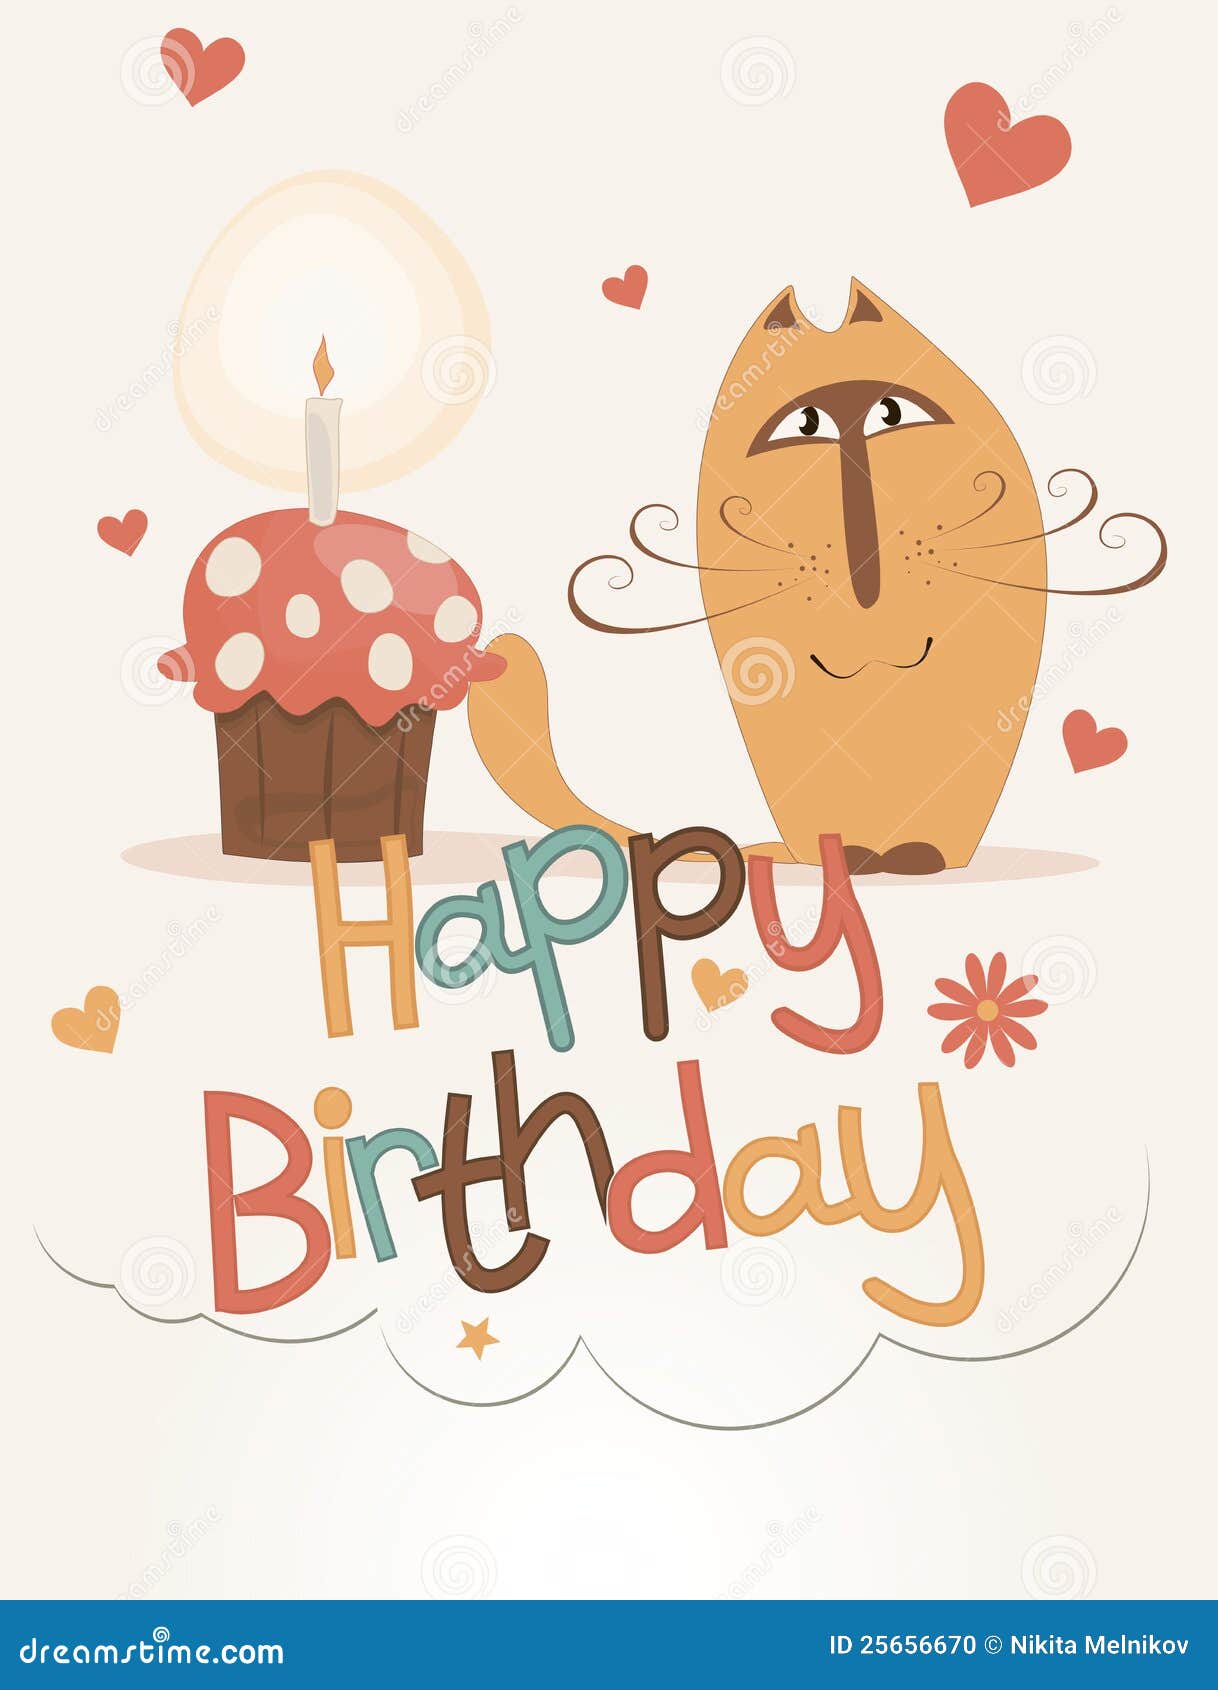 Cute Happy Birthday Card Stock Photo - Image: 25656670